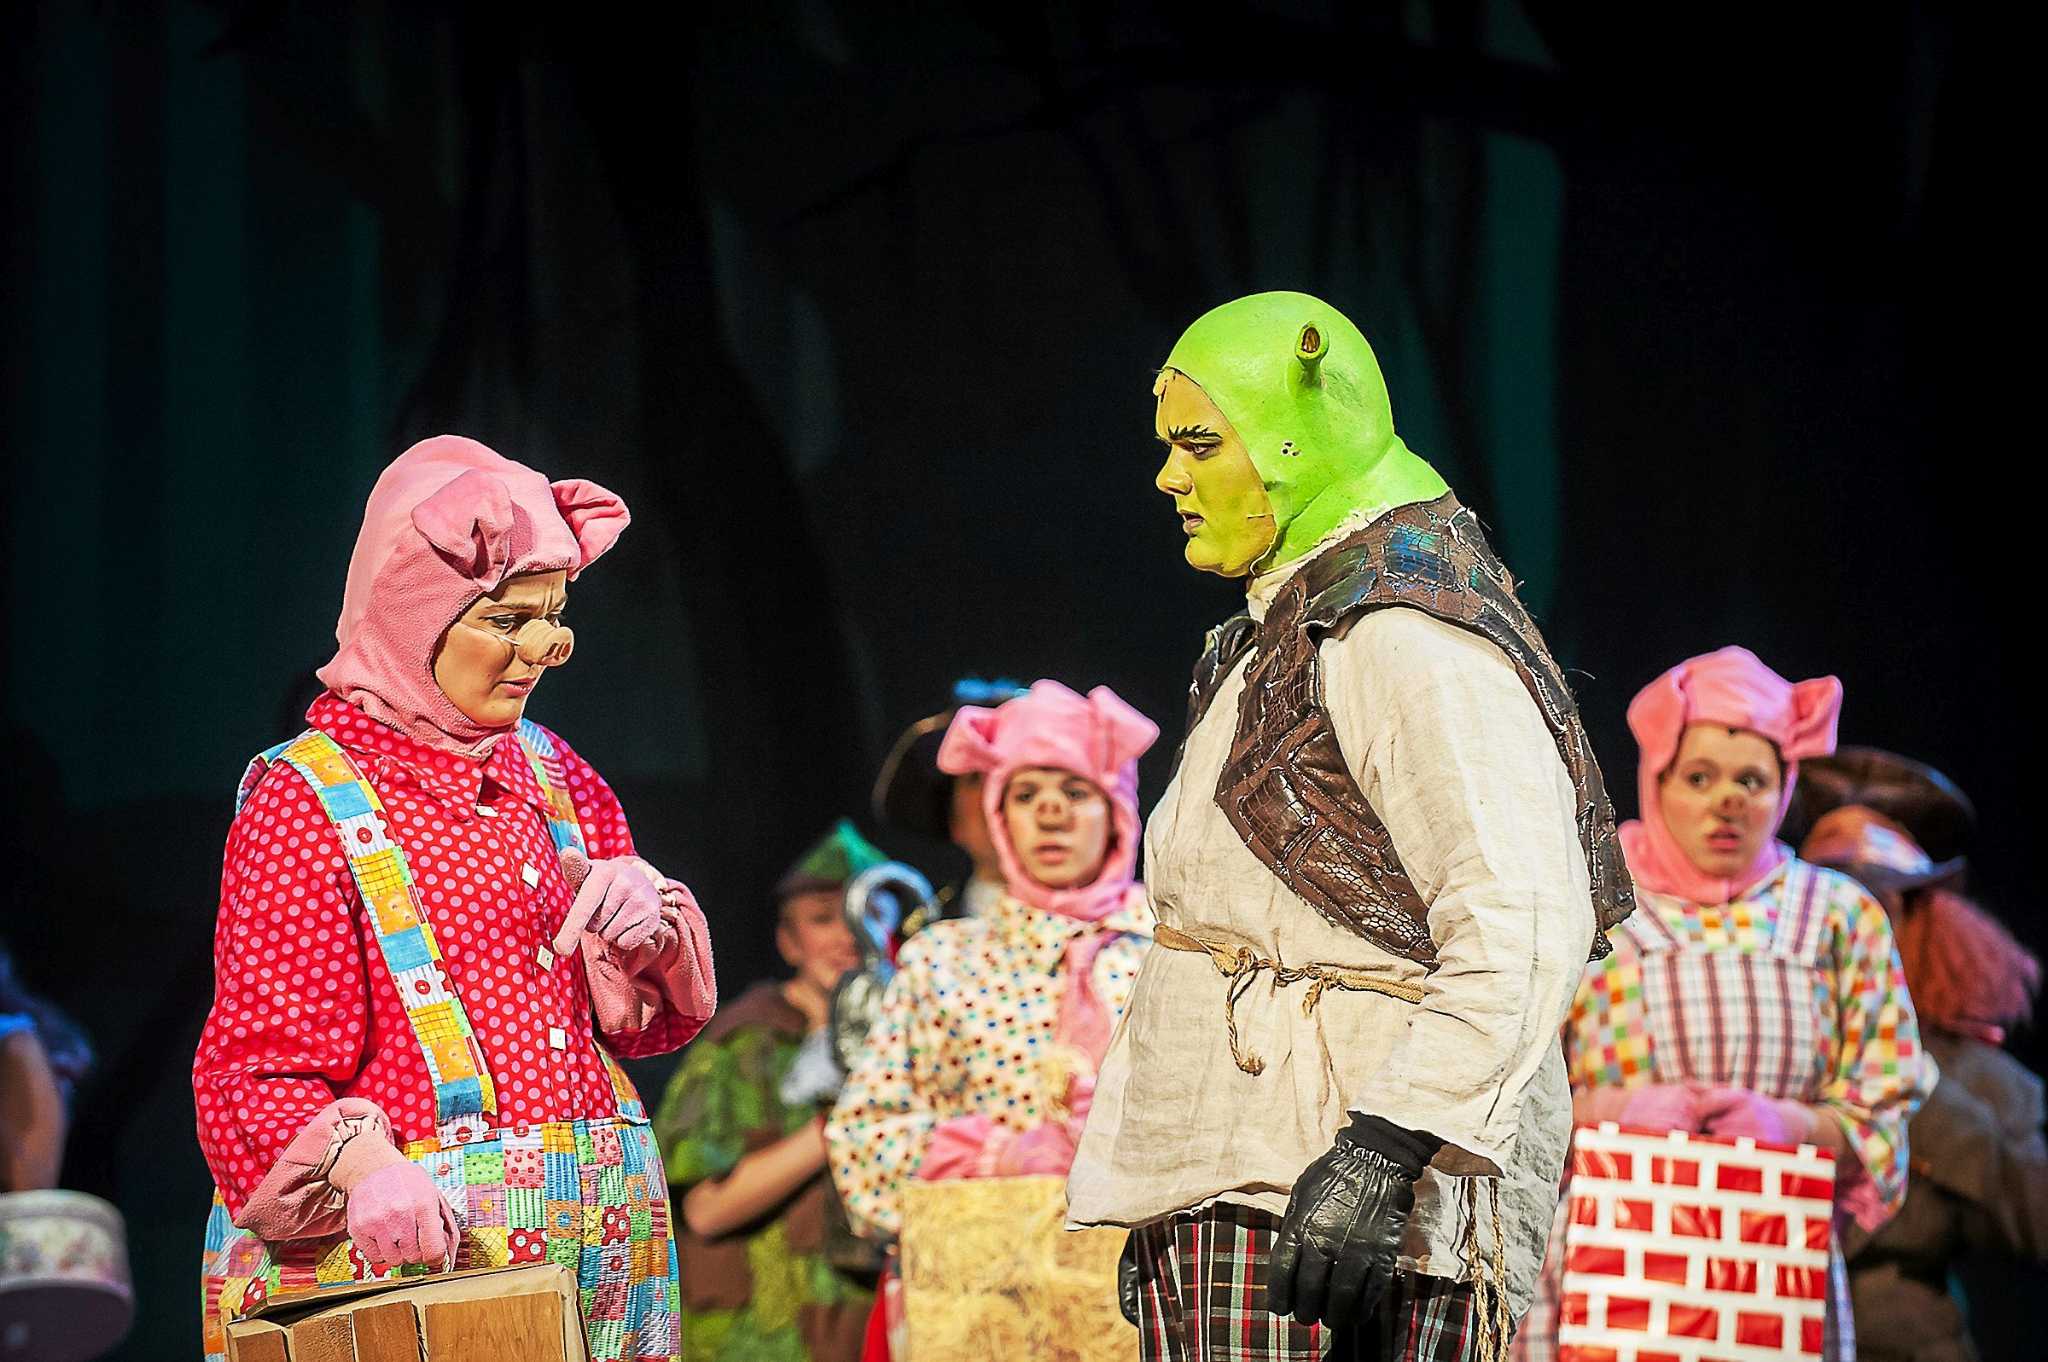 Shrek The Musical - ProductionPro